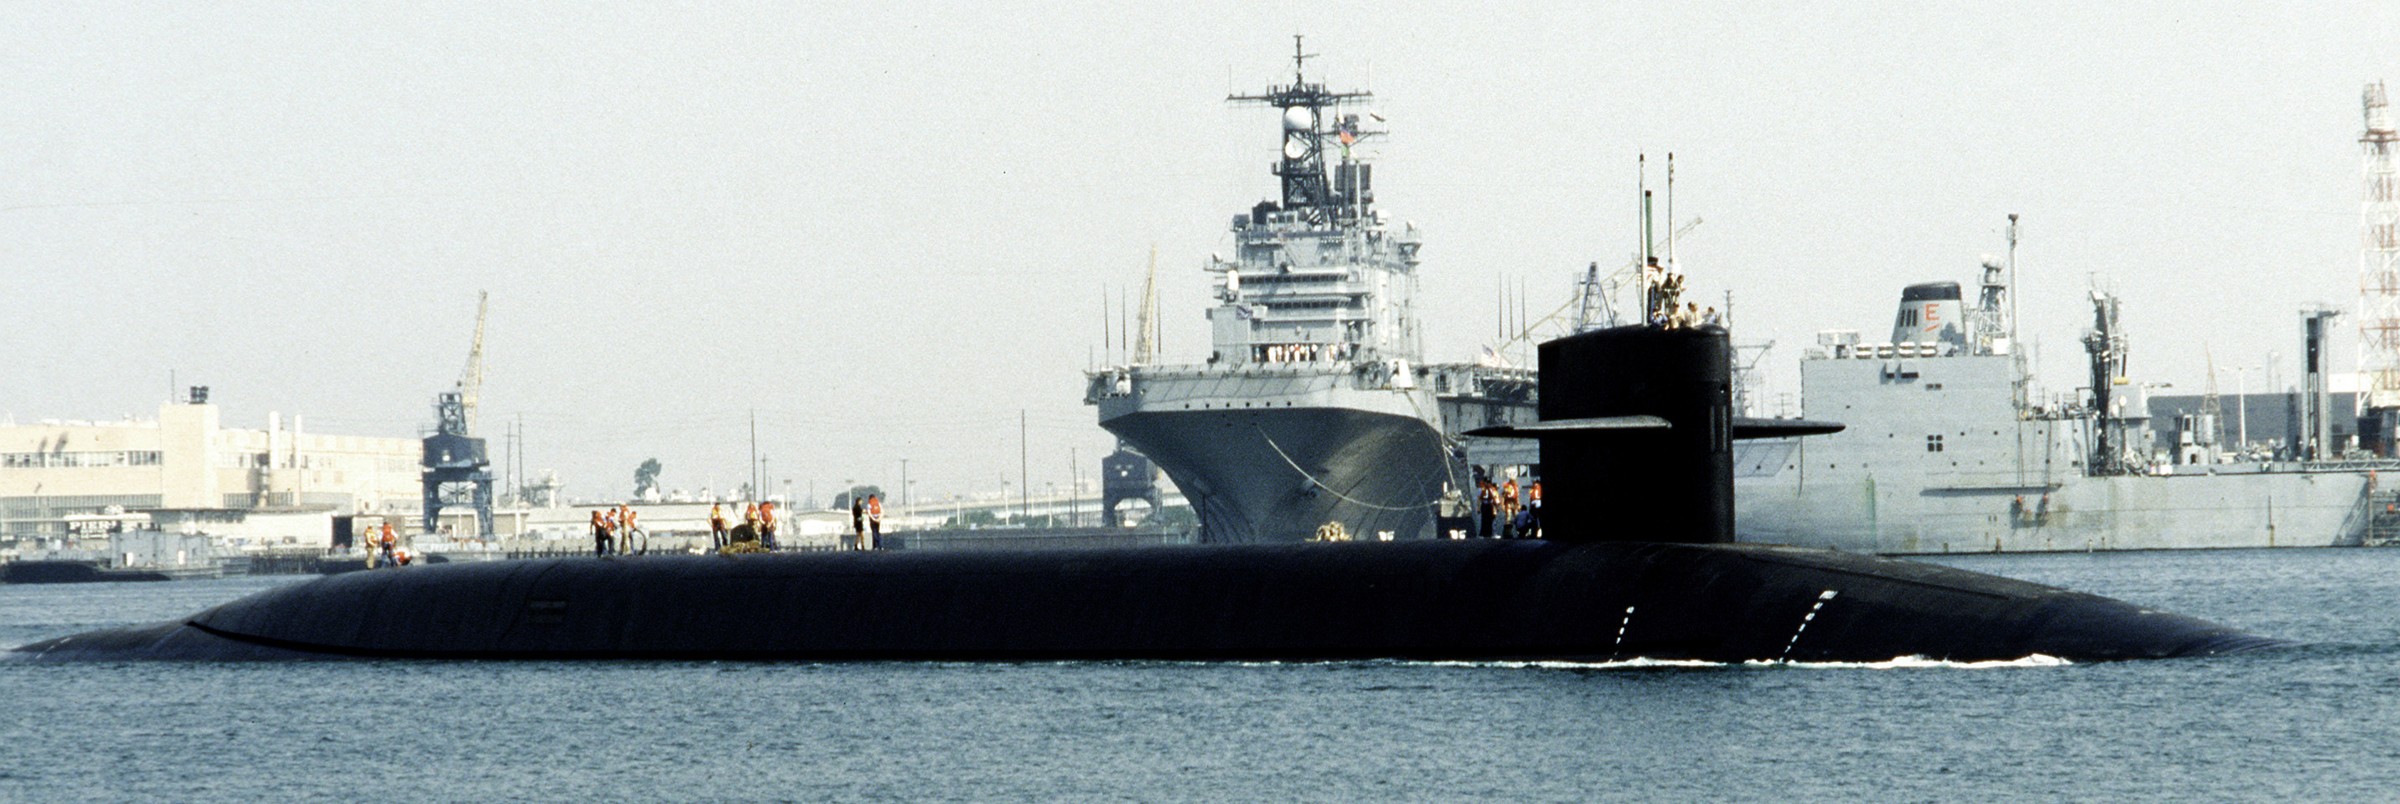 ssbn-733 uss nevada ohio class ballistic missile submarine 1990 22 long beach naval shipyard california